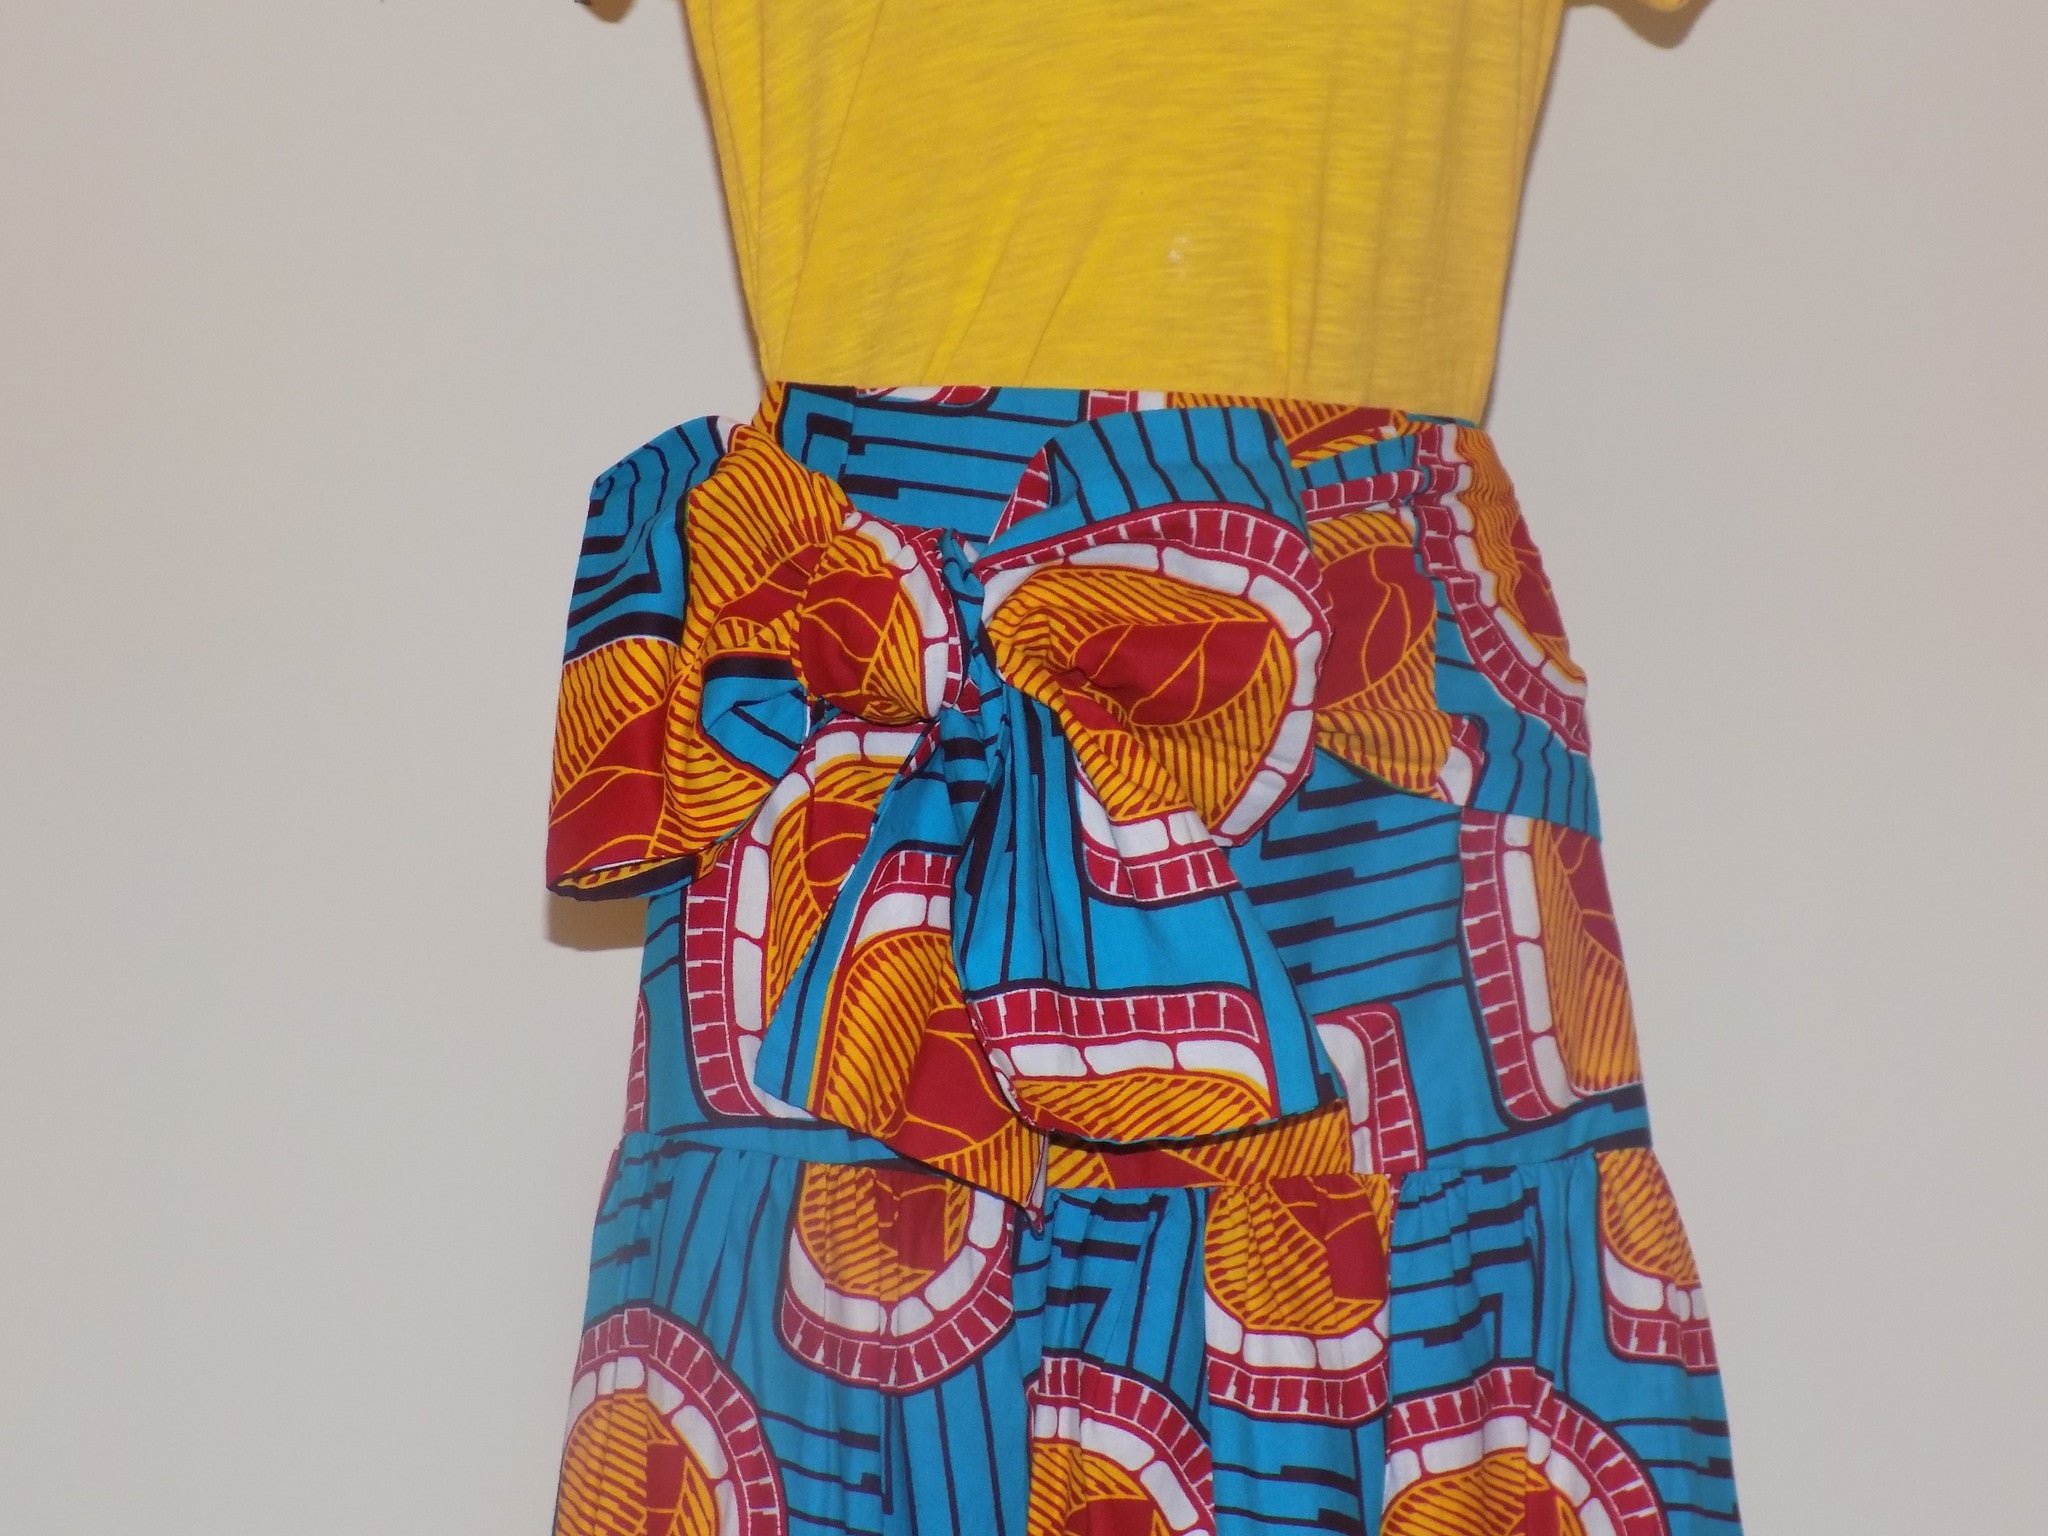 African Print Skirt w/ Sash- Abigail